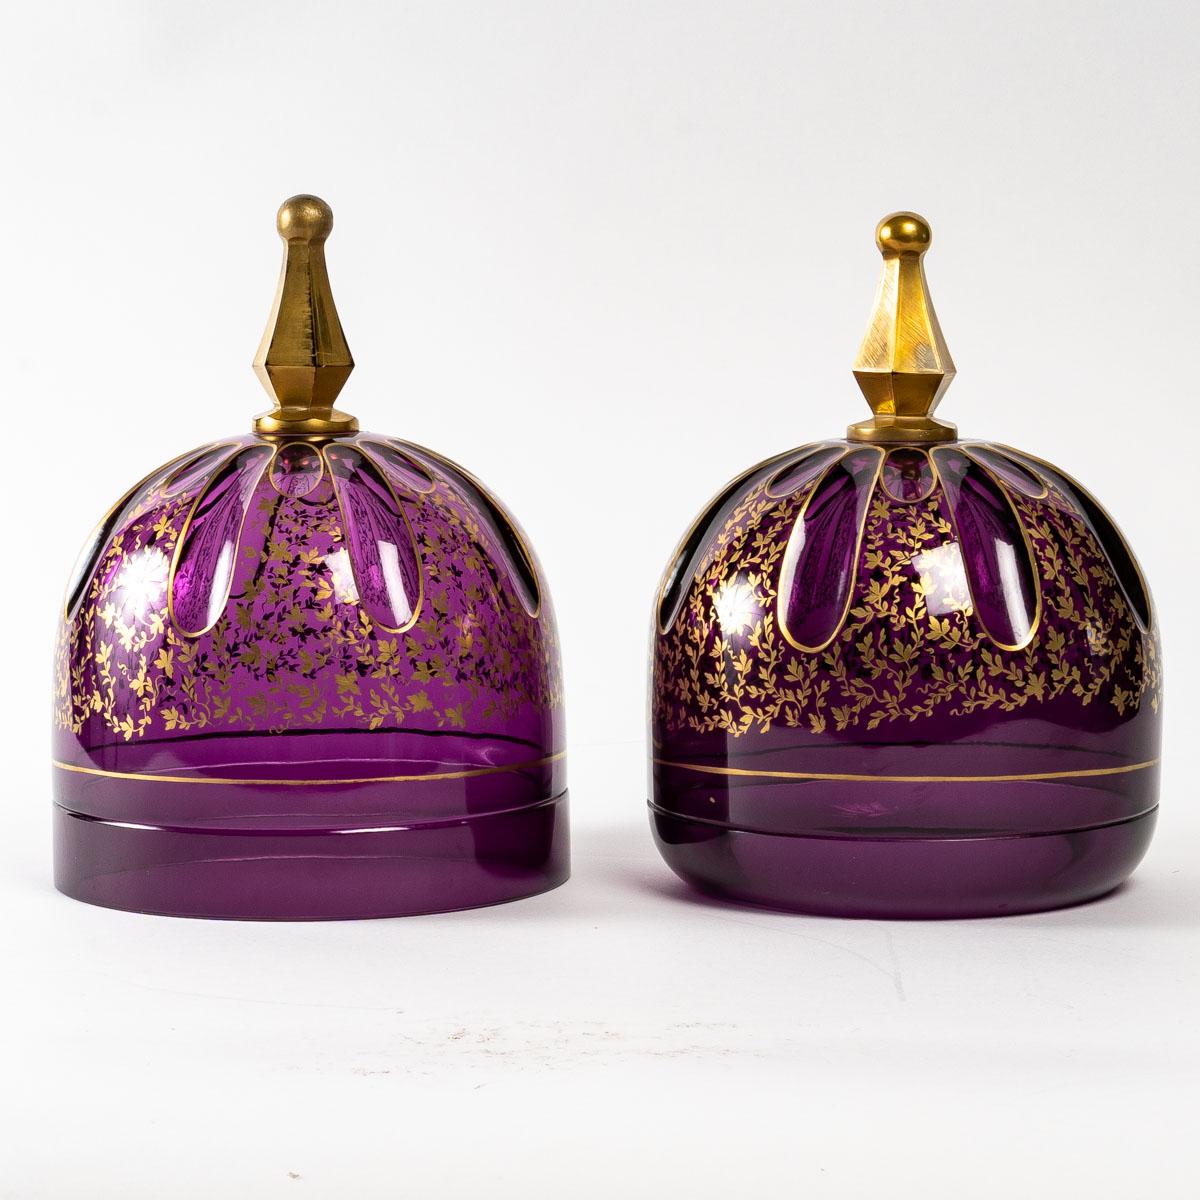 Pair of violet Bohemian crystal Bells, 19th century.
Pair of Bohemian crystal bells in purple with gold highlights, 19th century.
Measures: H: 26 cm, D: 19 cm
 